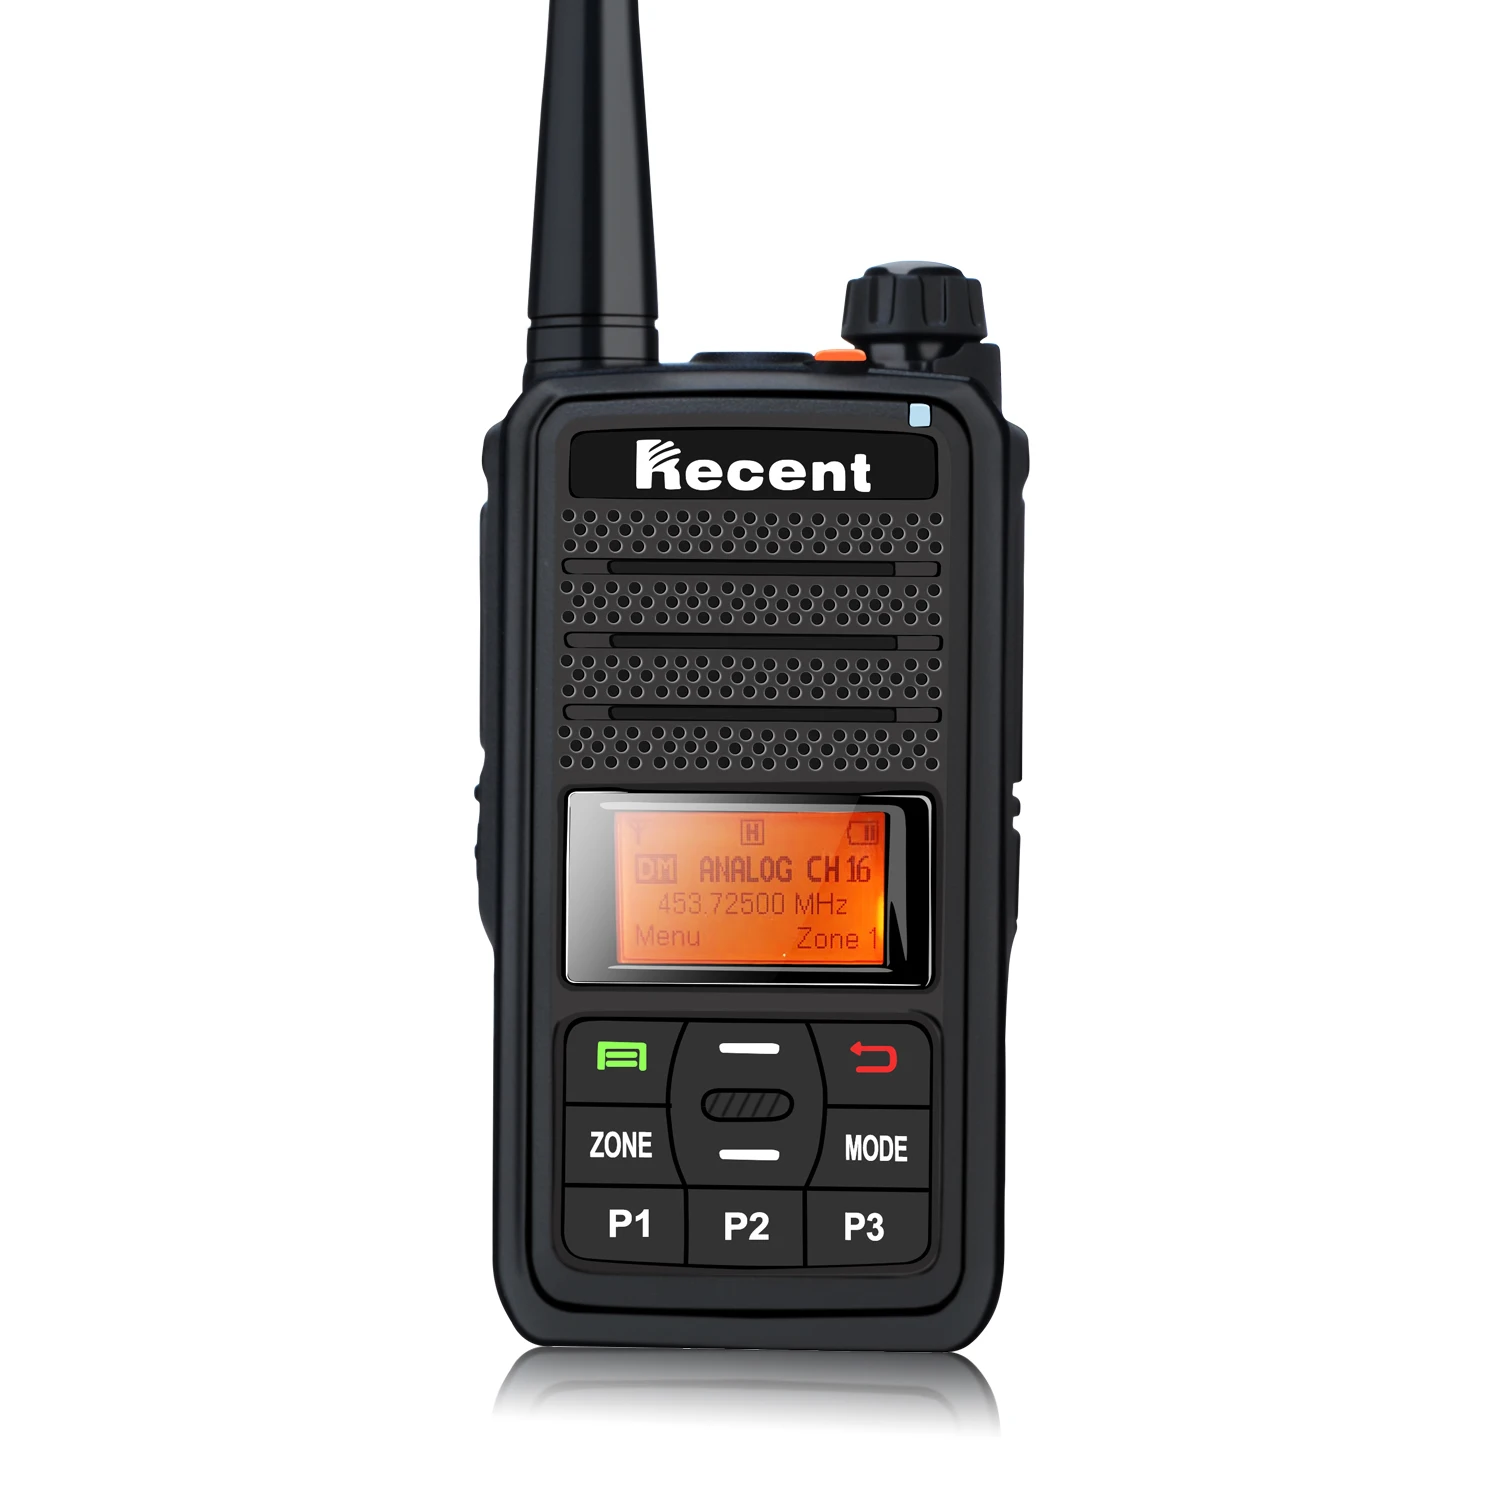 RS-339D Digital two way radio DMR VHF UHF Dual Band Radio Support digital mode & analog mode Walkie  talkie